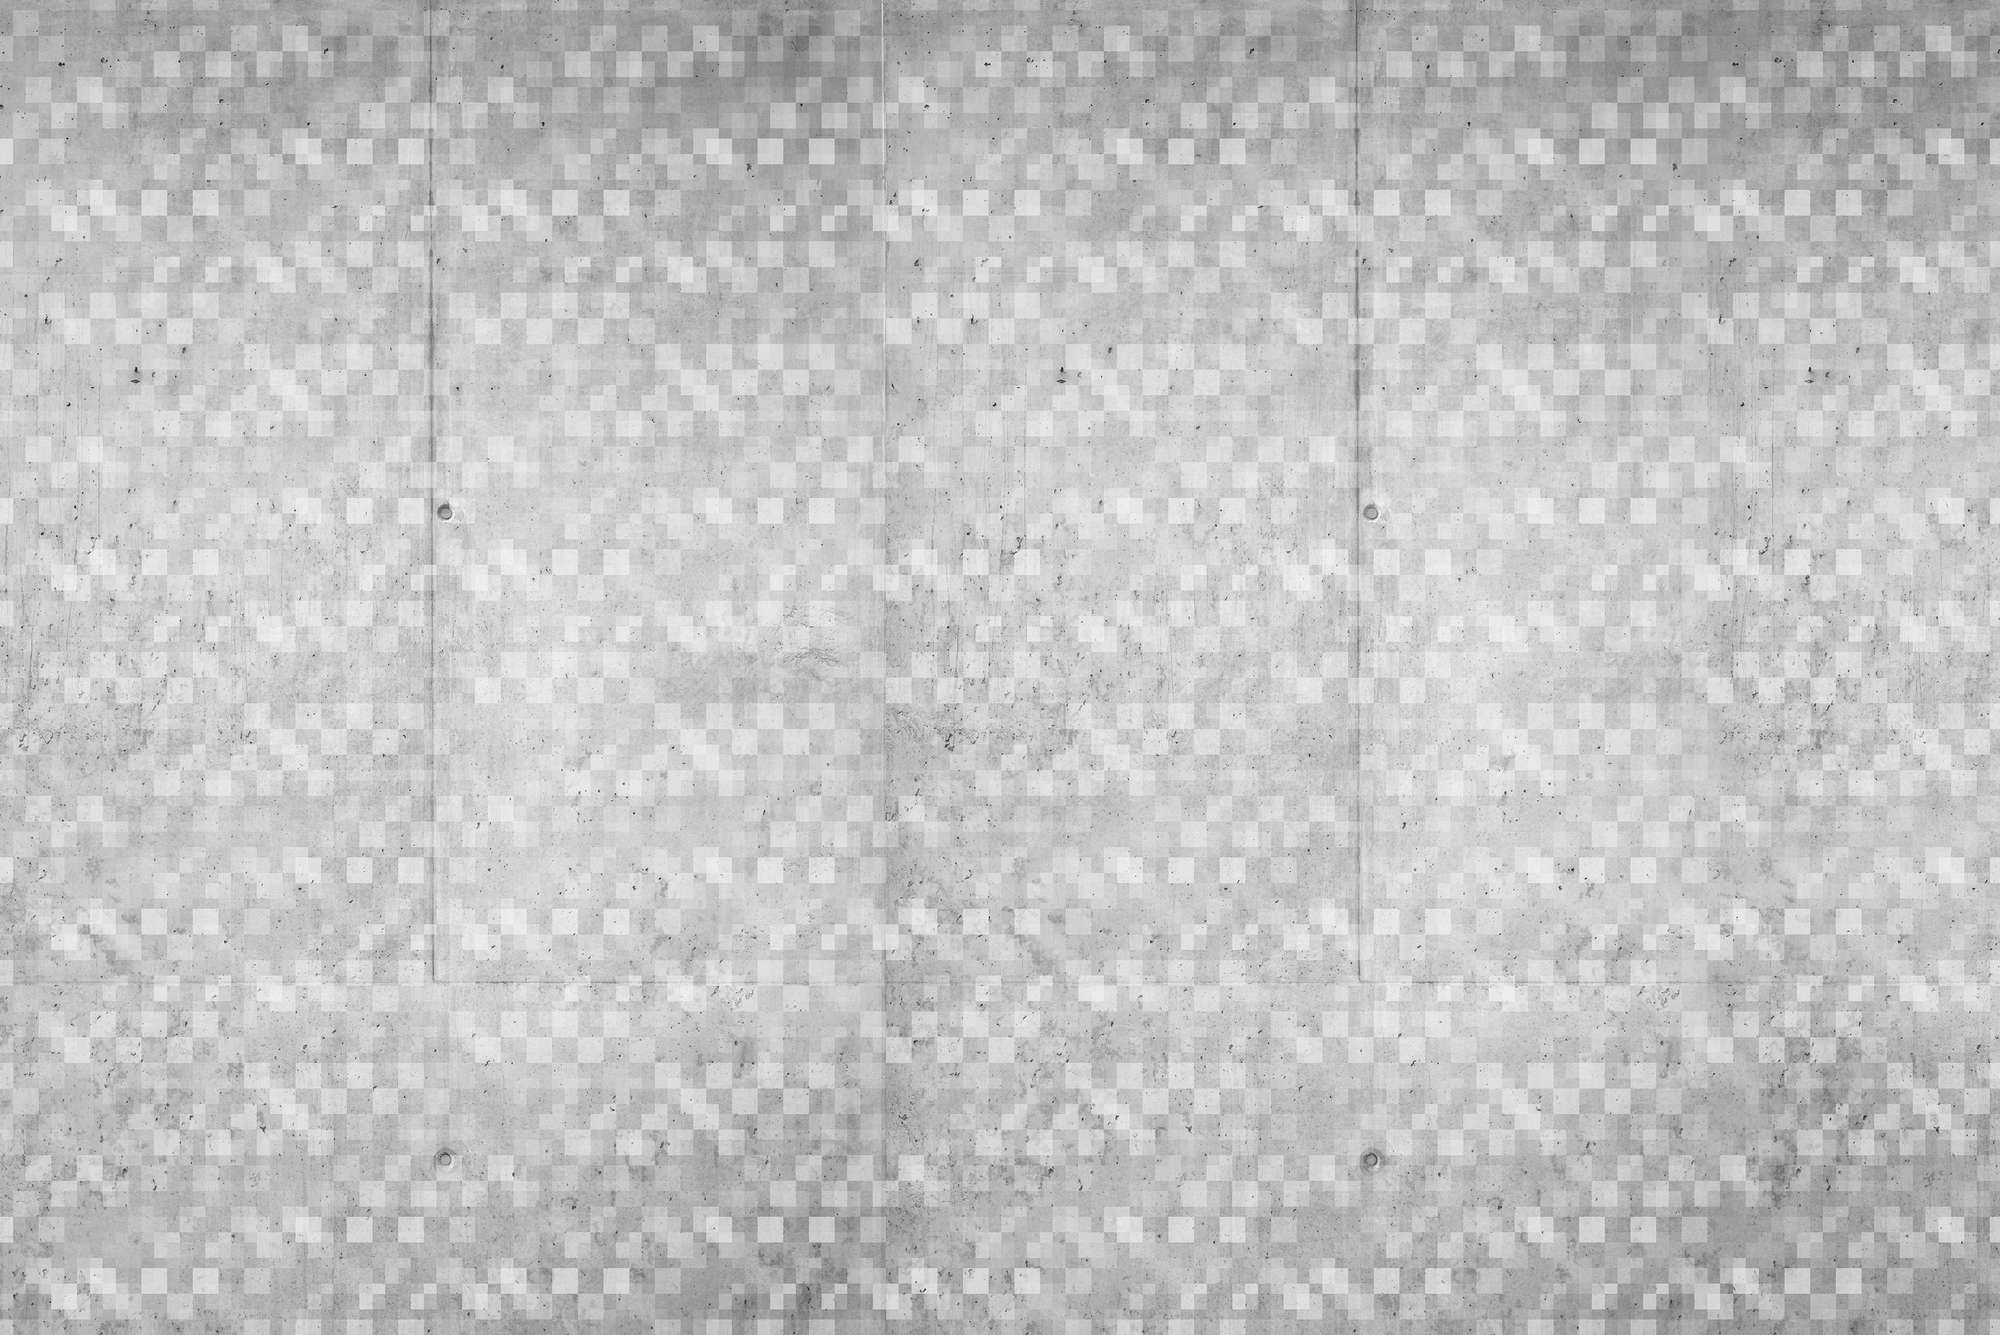             Grafik Fototapete mit überlappendem Würfel Motiv grau auf Strukturvlies
        